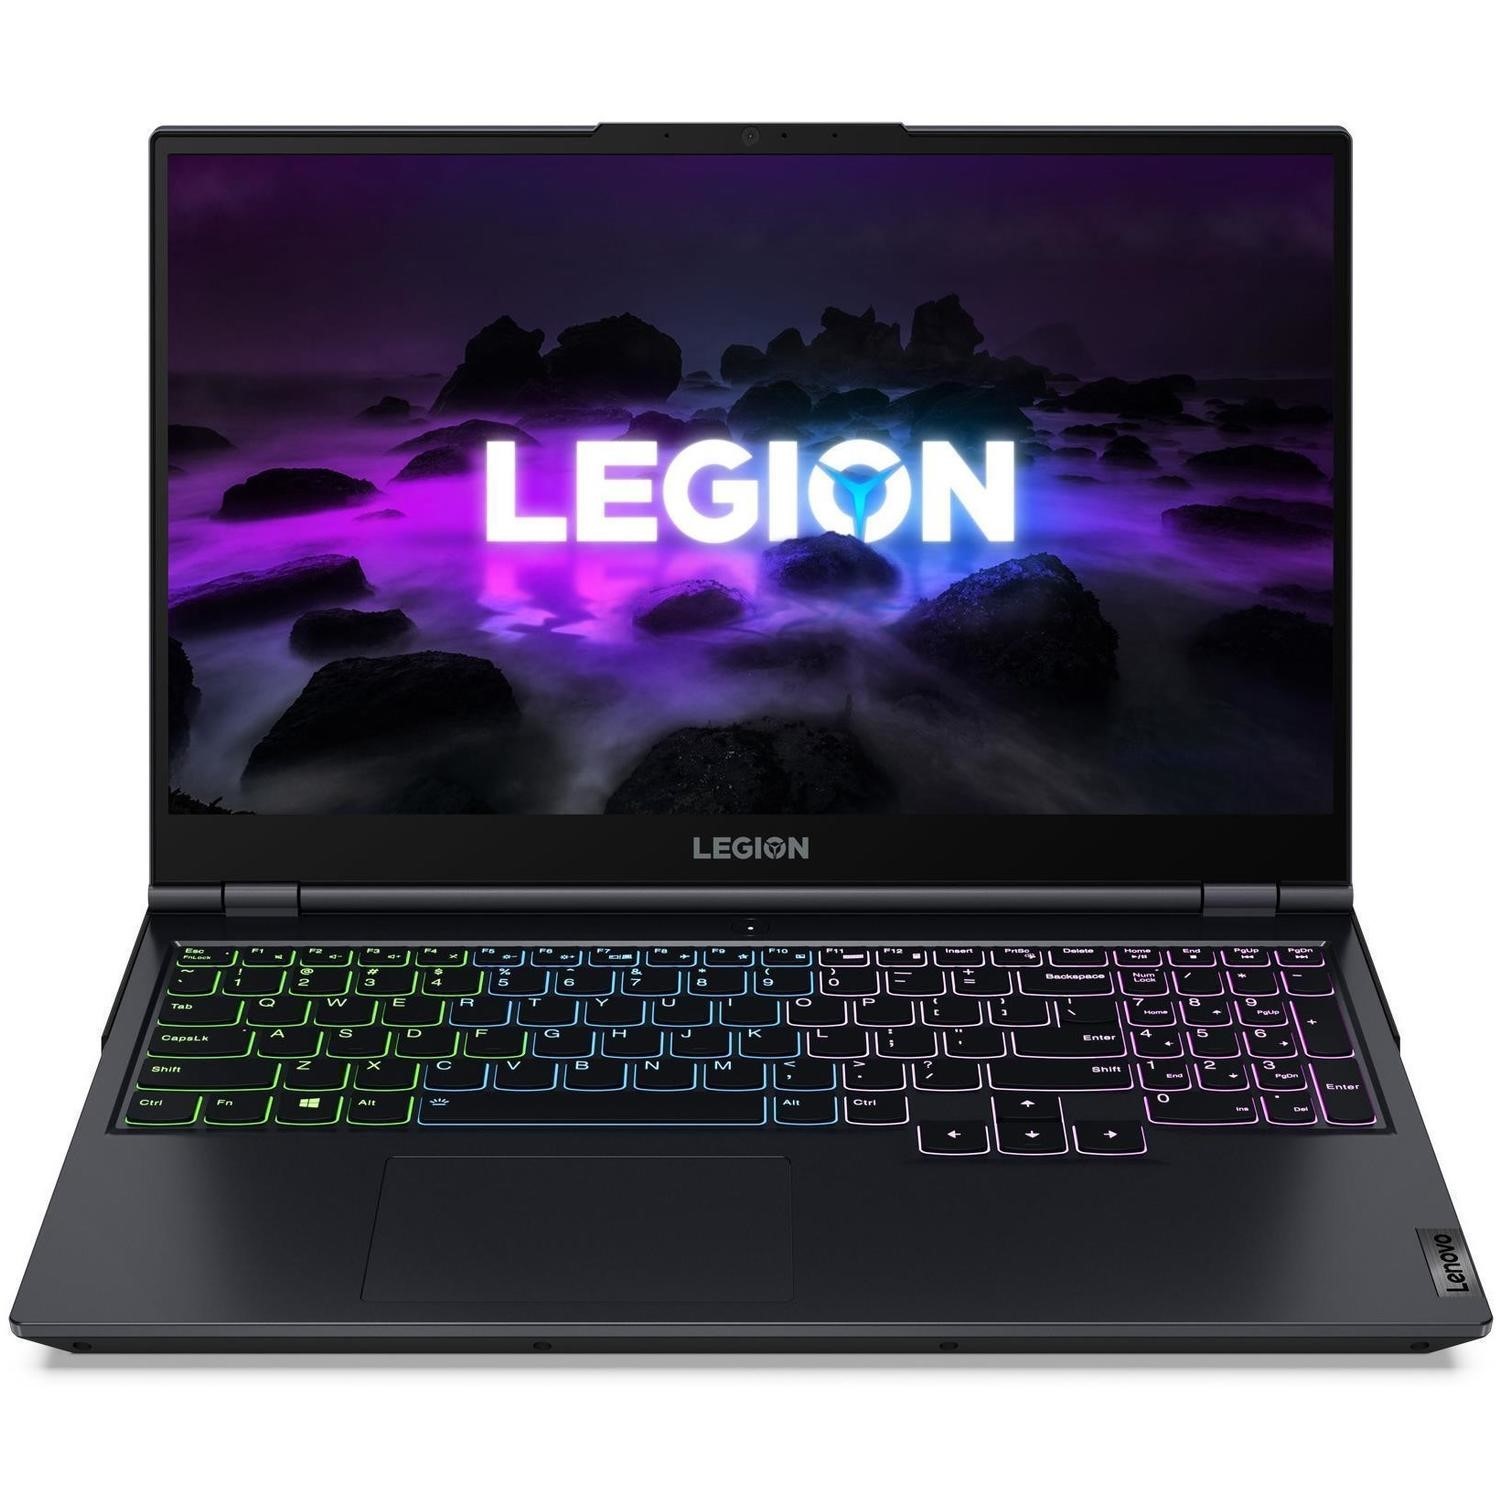 Lenovo Legion 5 Core i7-11800H 16GB 512GB SSD GeForce RTX 3070 15.6" Gaming Laptop